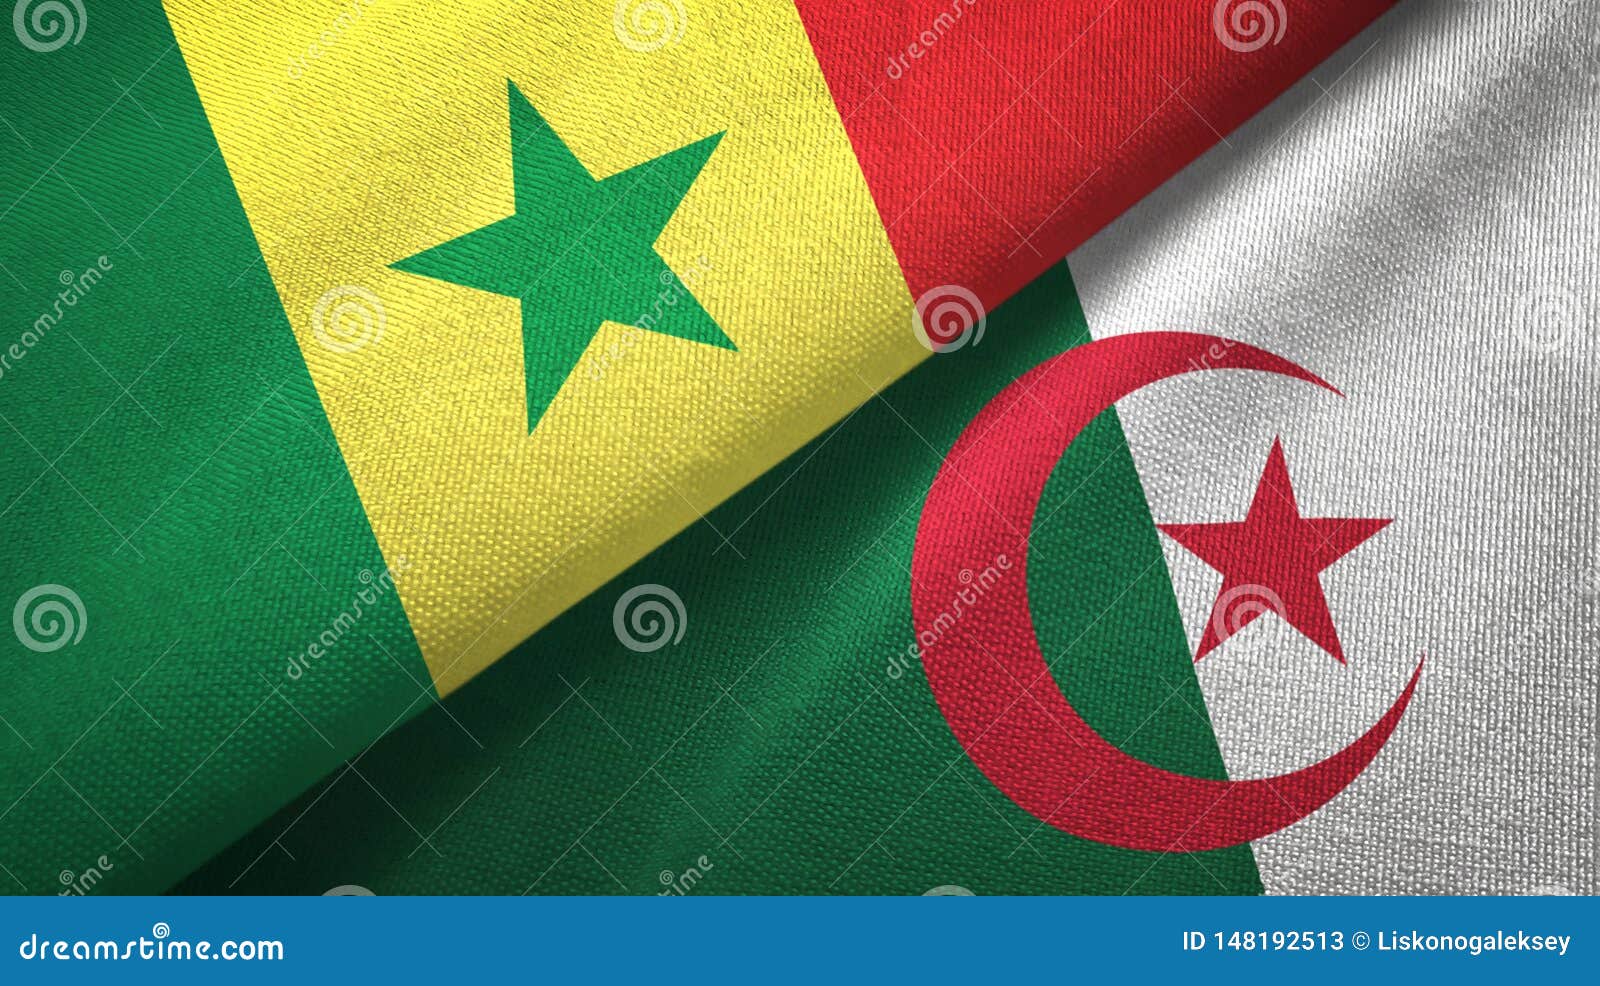 senegal and algeria two flags textile cloth, fabric texture